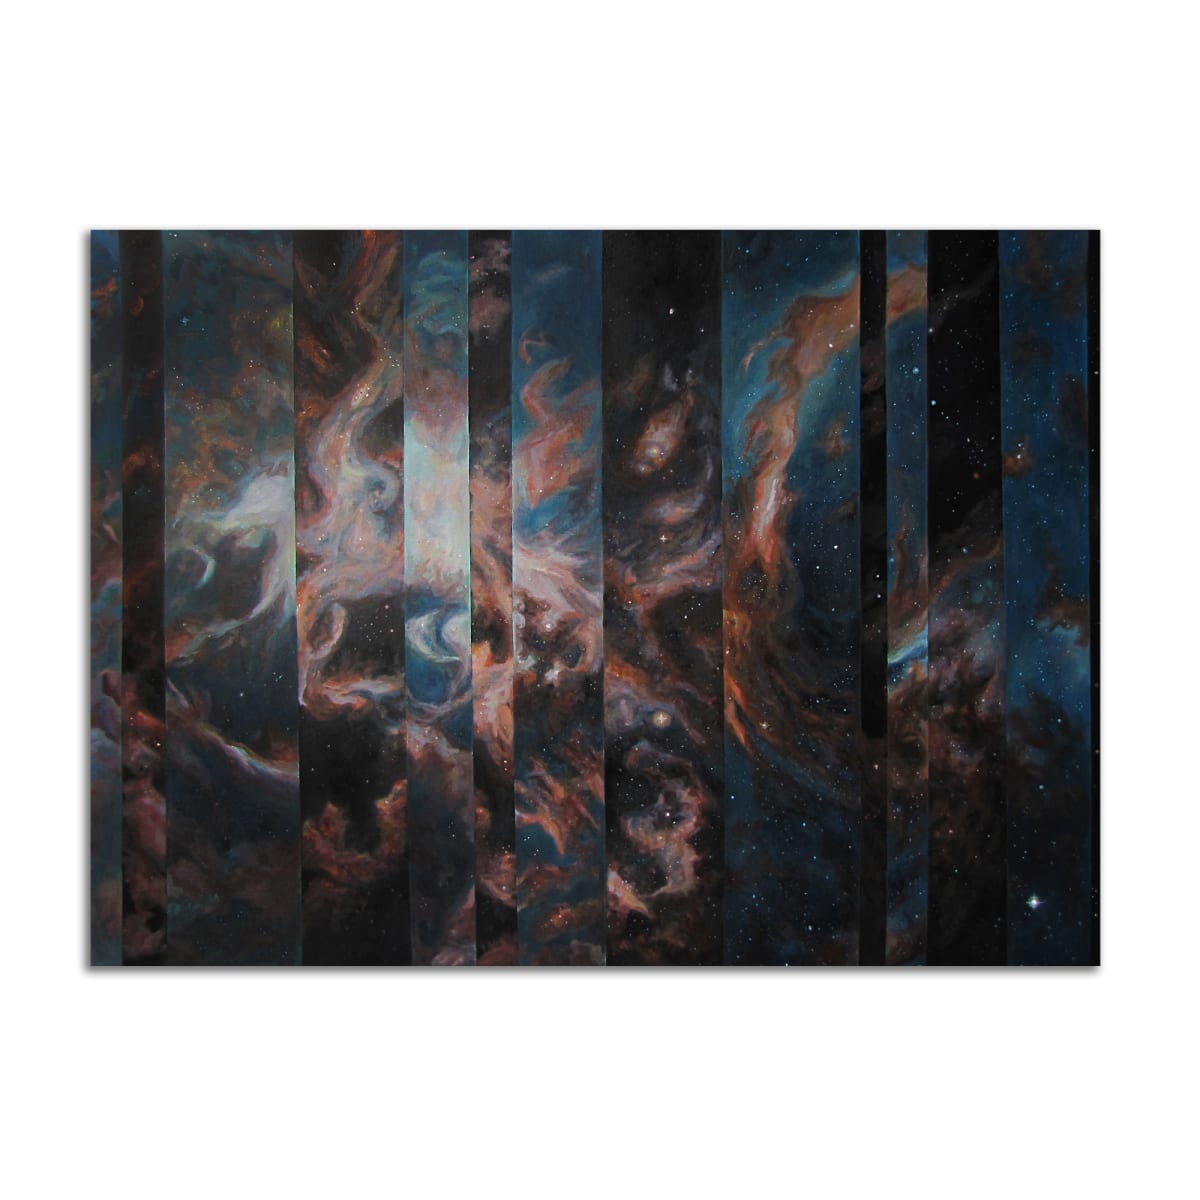 11: Tarantula Nebula by Christie Snelson 